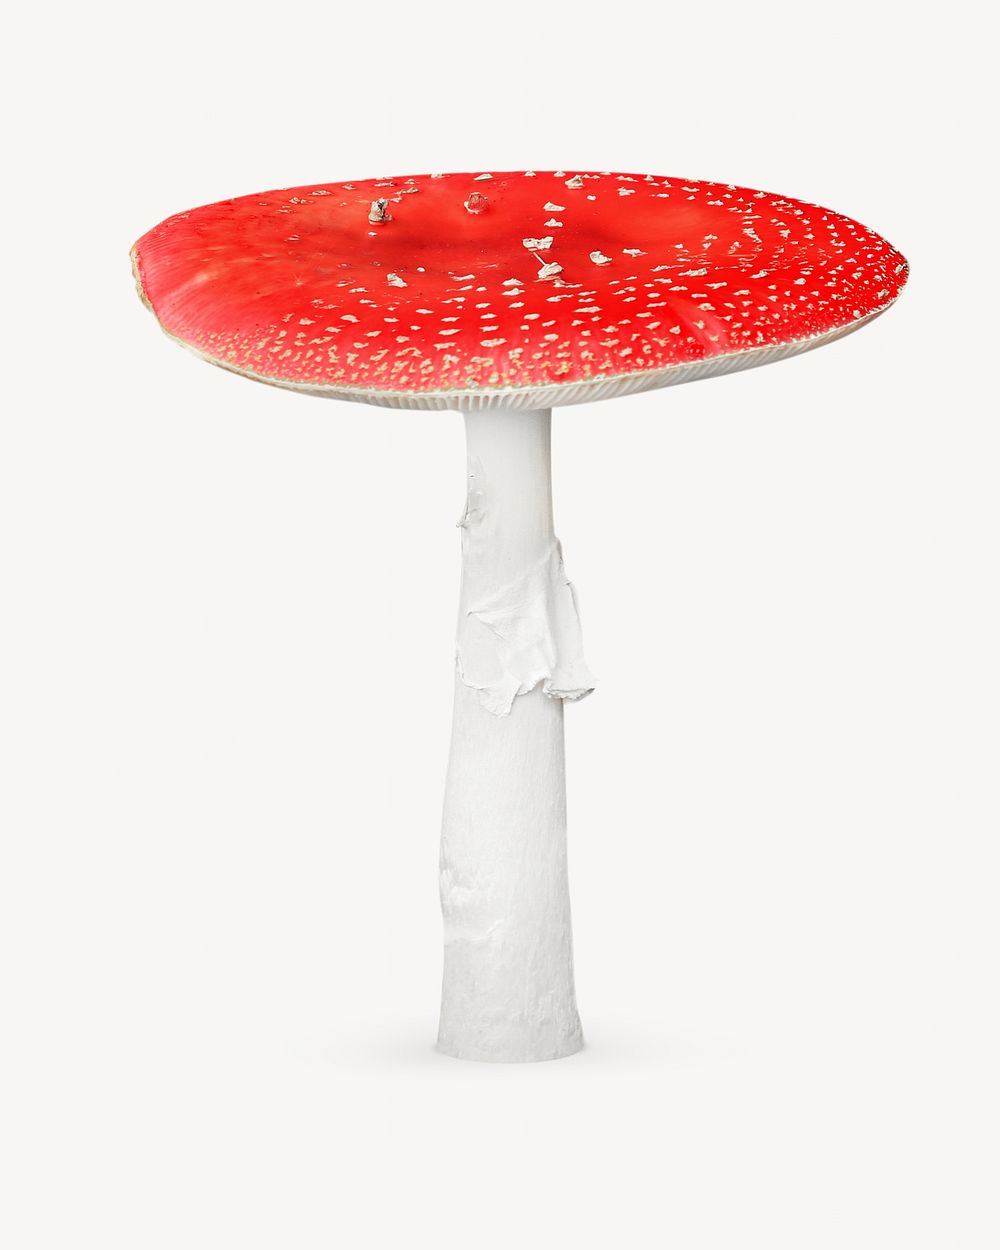 Fly agaric mushroom on white background